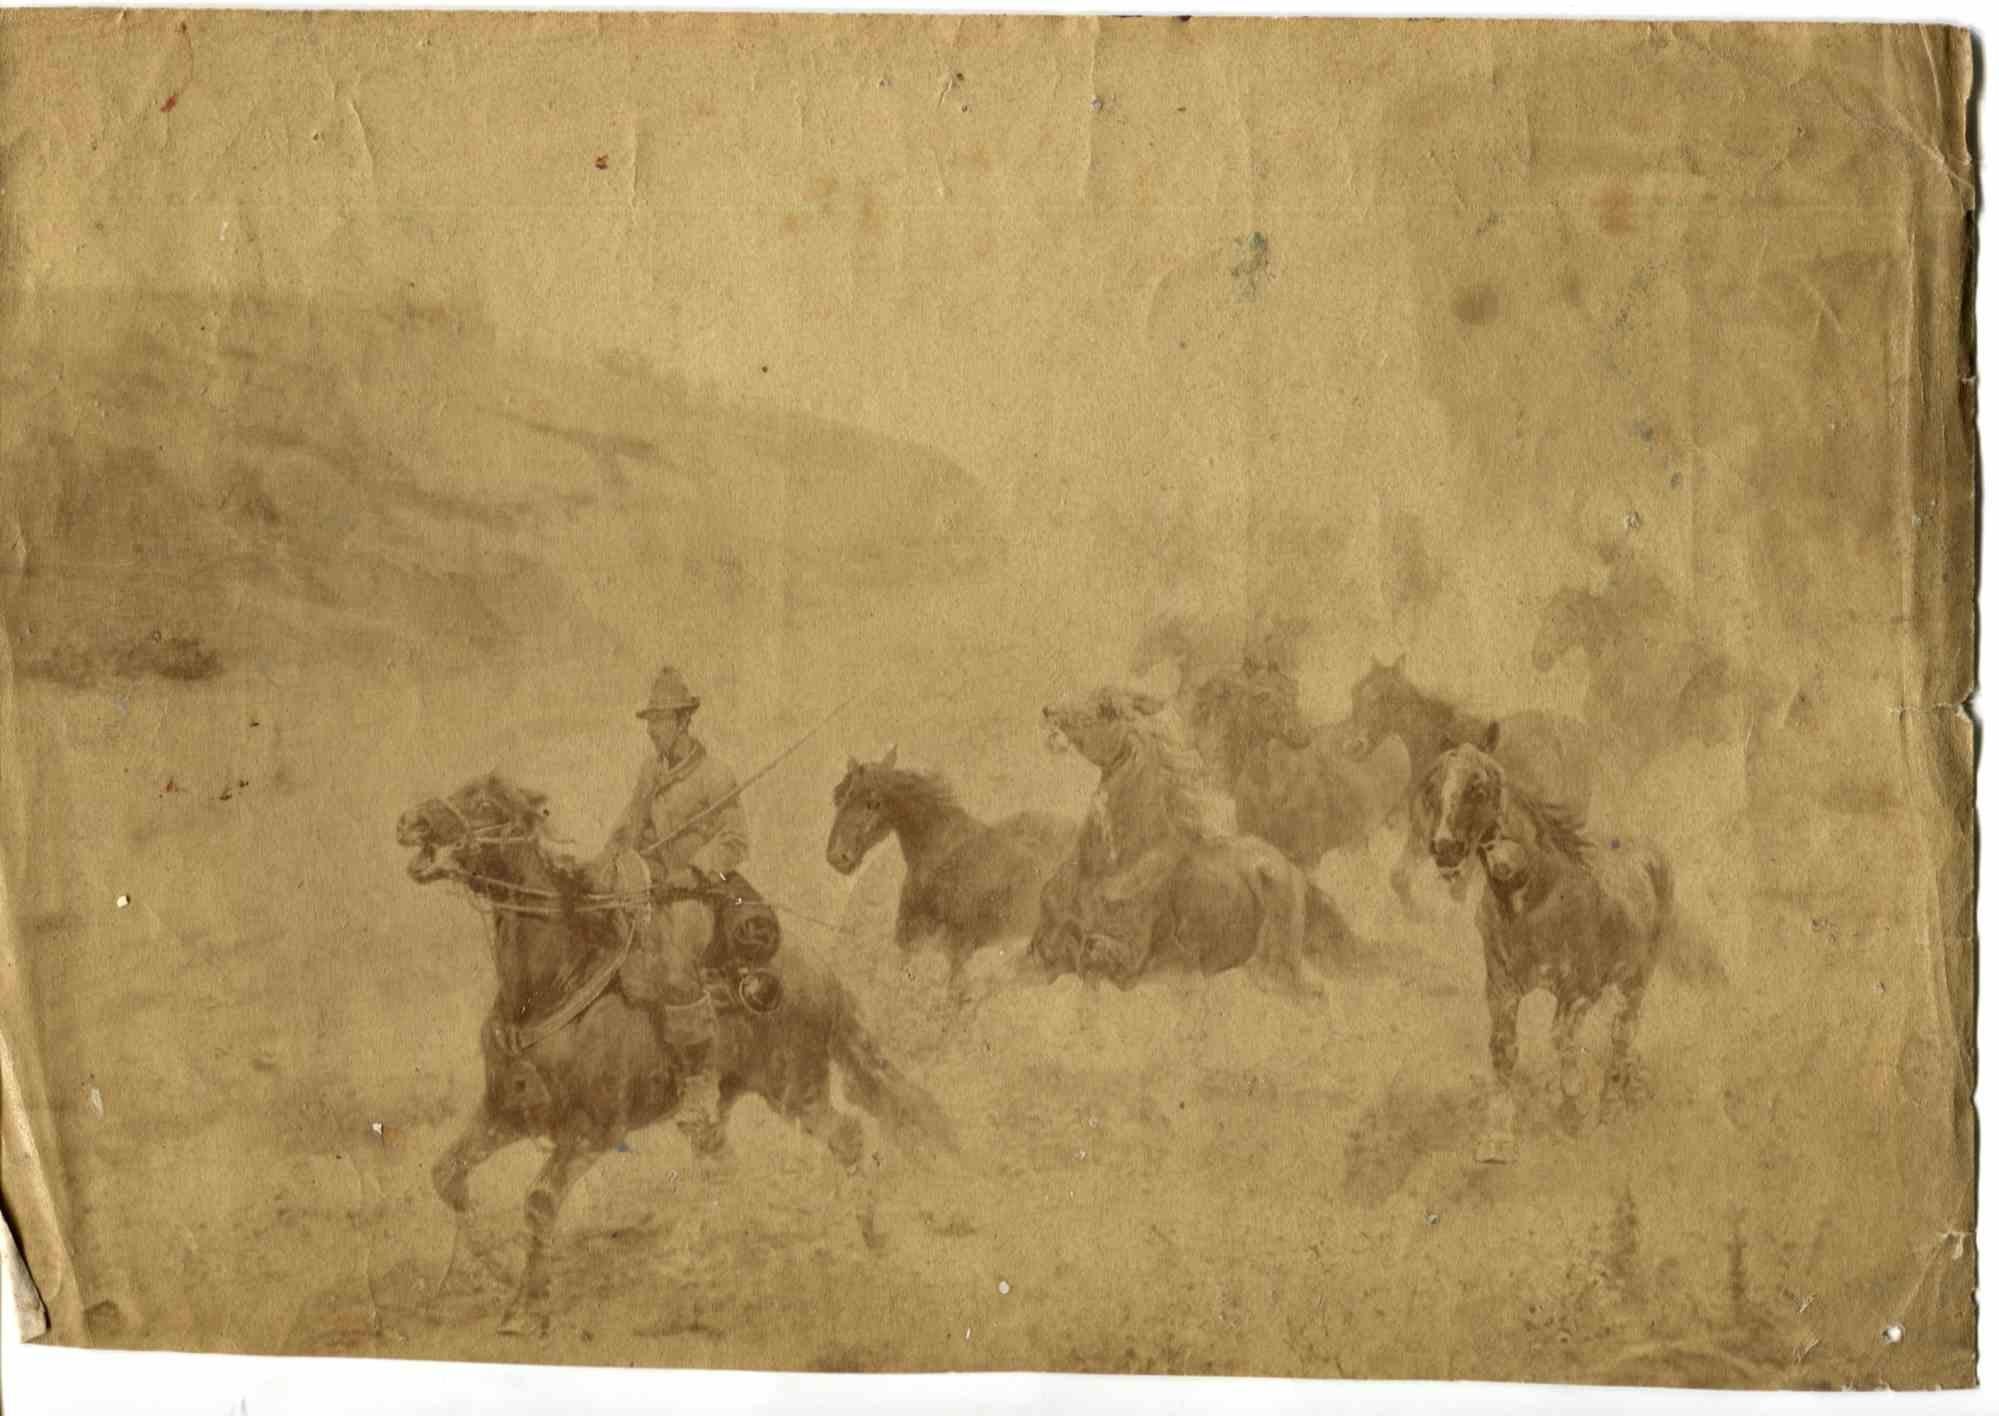 Unknown Portrait Photograph - Horses - Photo- late 19th Century.